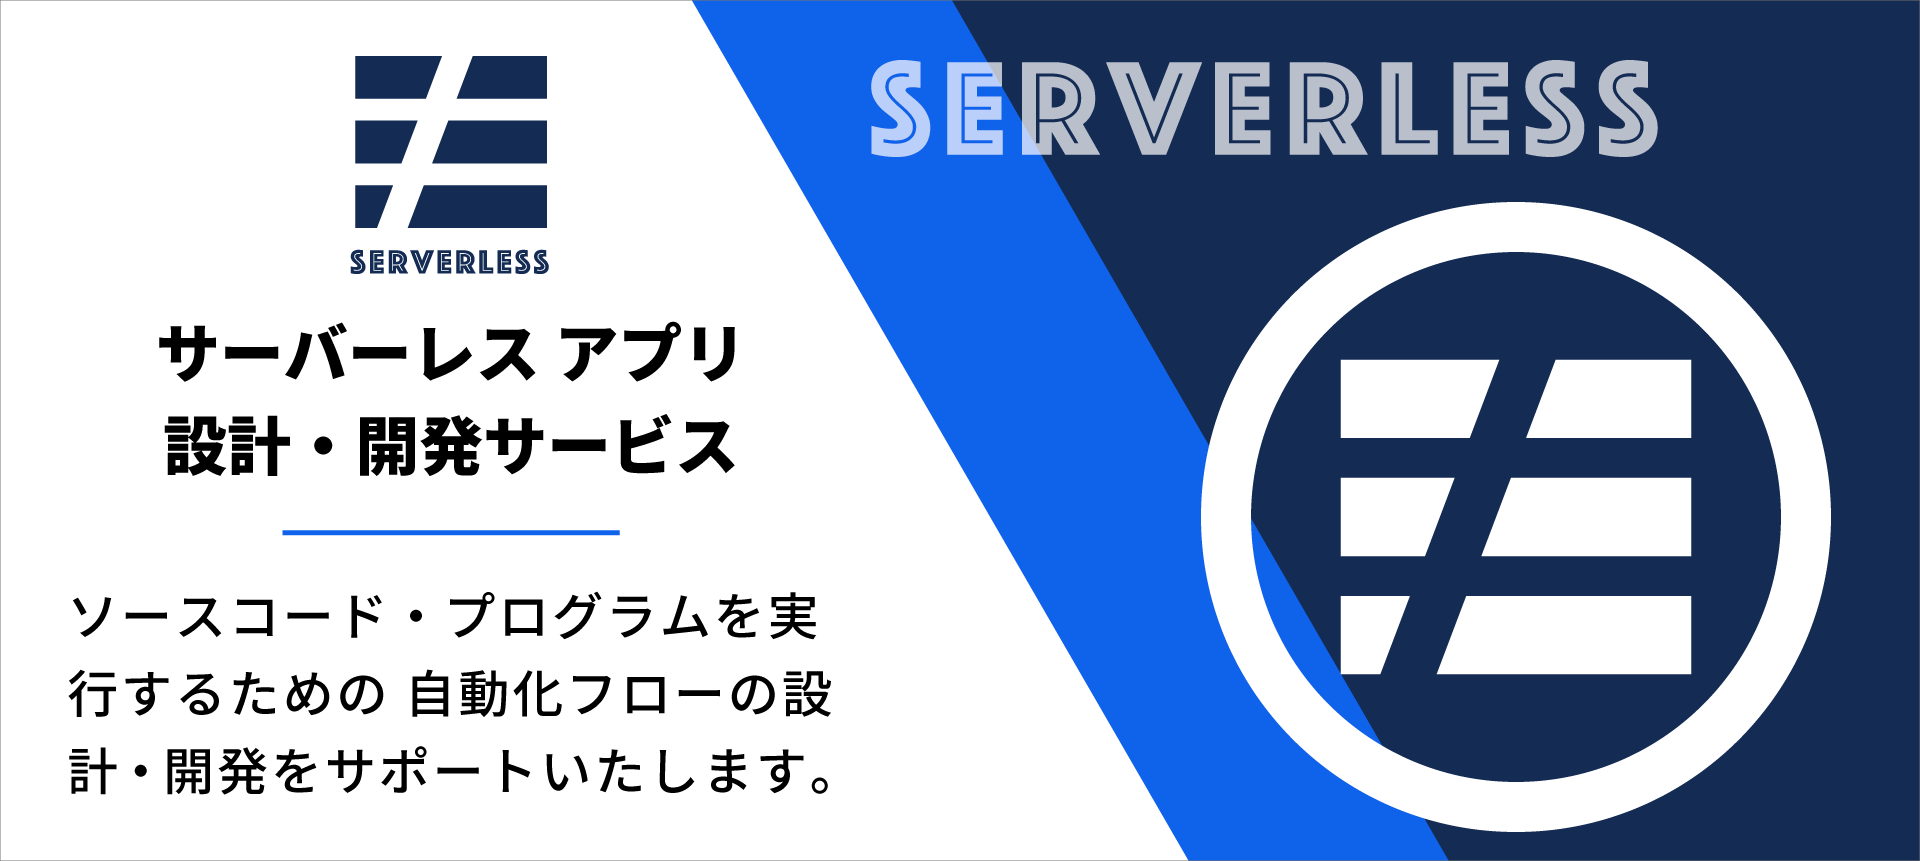 Serverless app development service